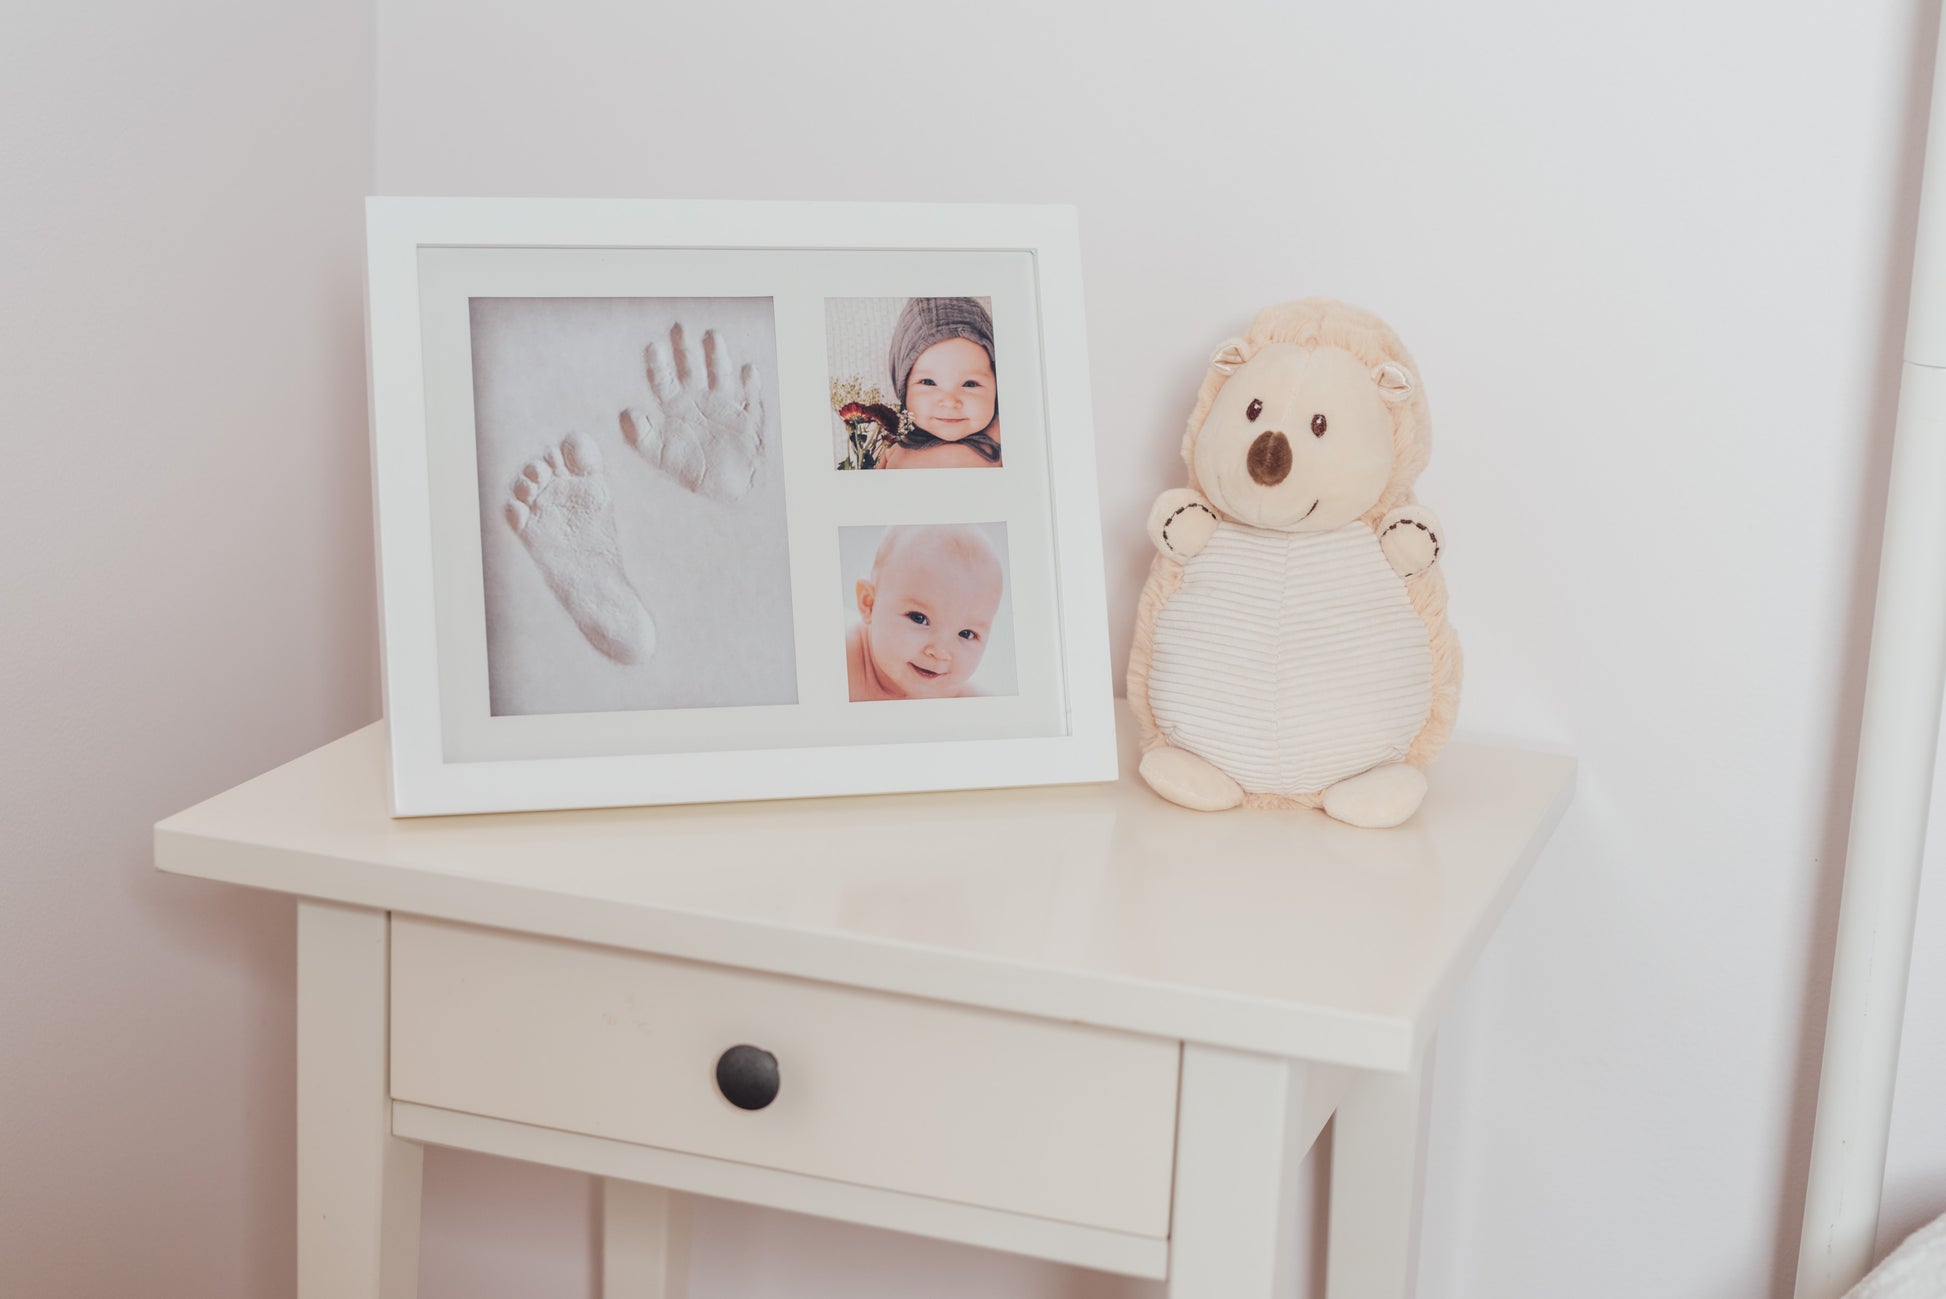 Wavhello Baby Handprint & Footprint Frame Kit, Clay Casting & Photo Memory Keepsake Frame, Baby Registry Gift & Baby Shower Gift